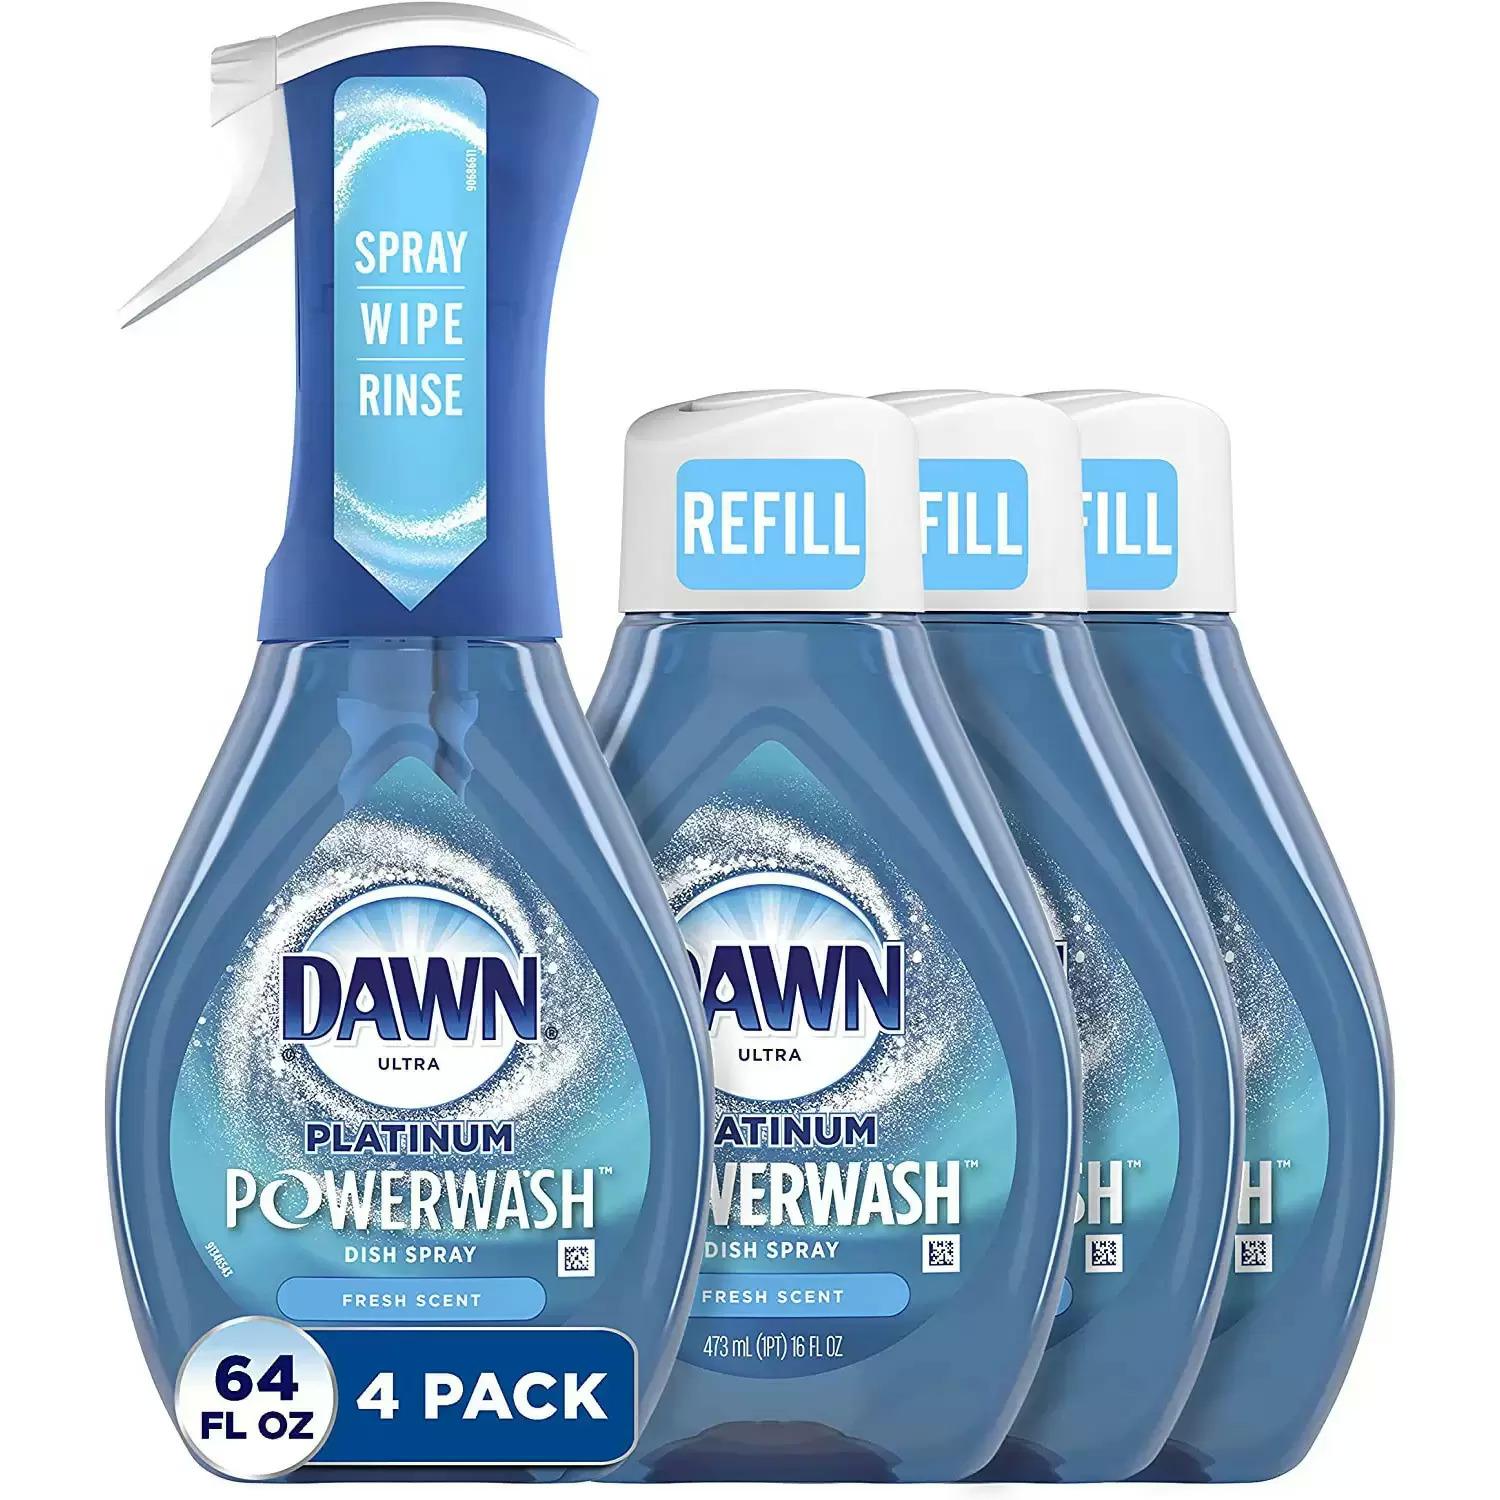 Dawn Platinum Powerwash Dish Spray Dish Soap for $12.54 Shipped